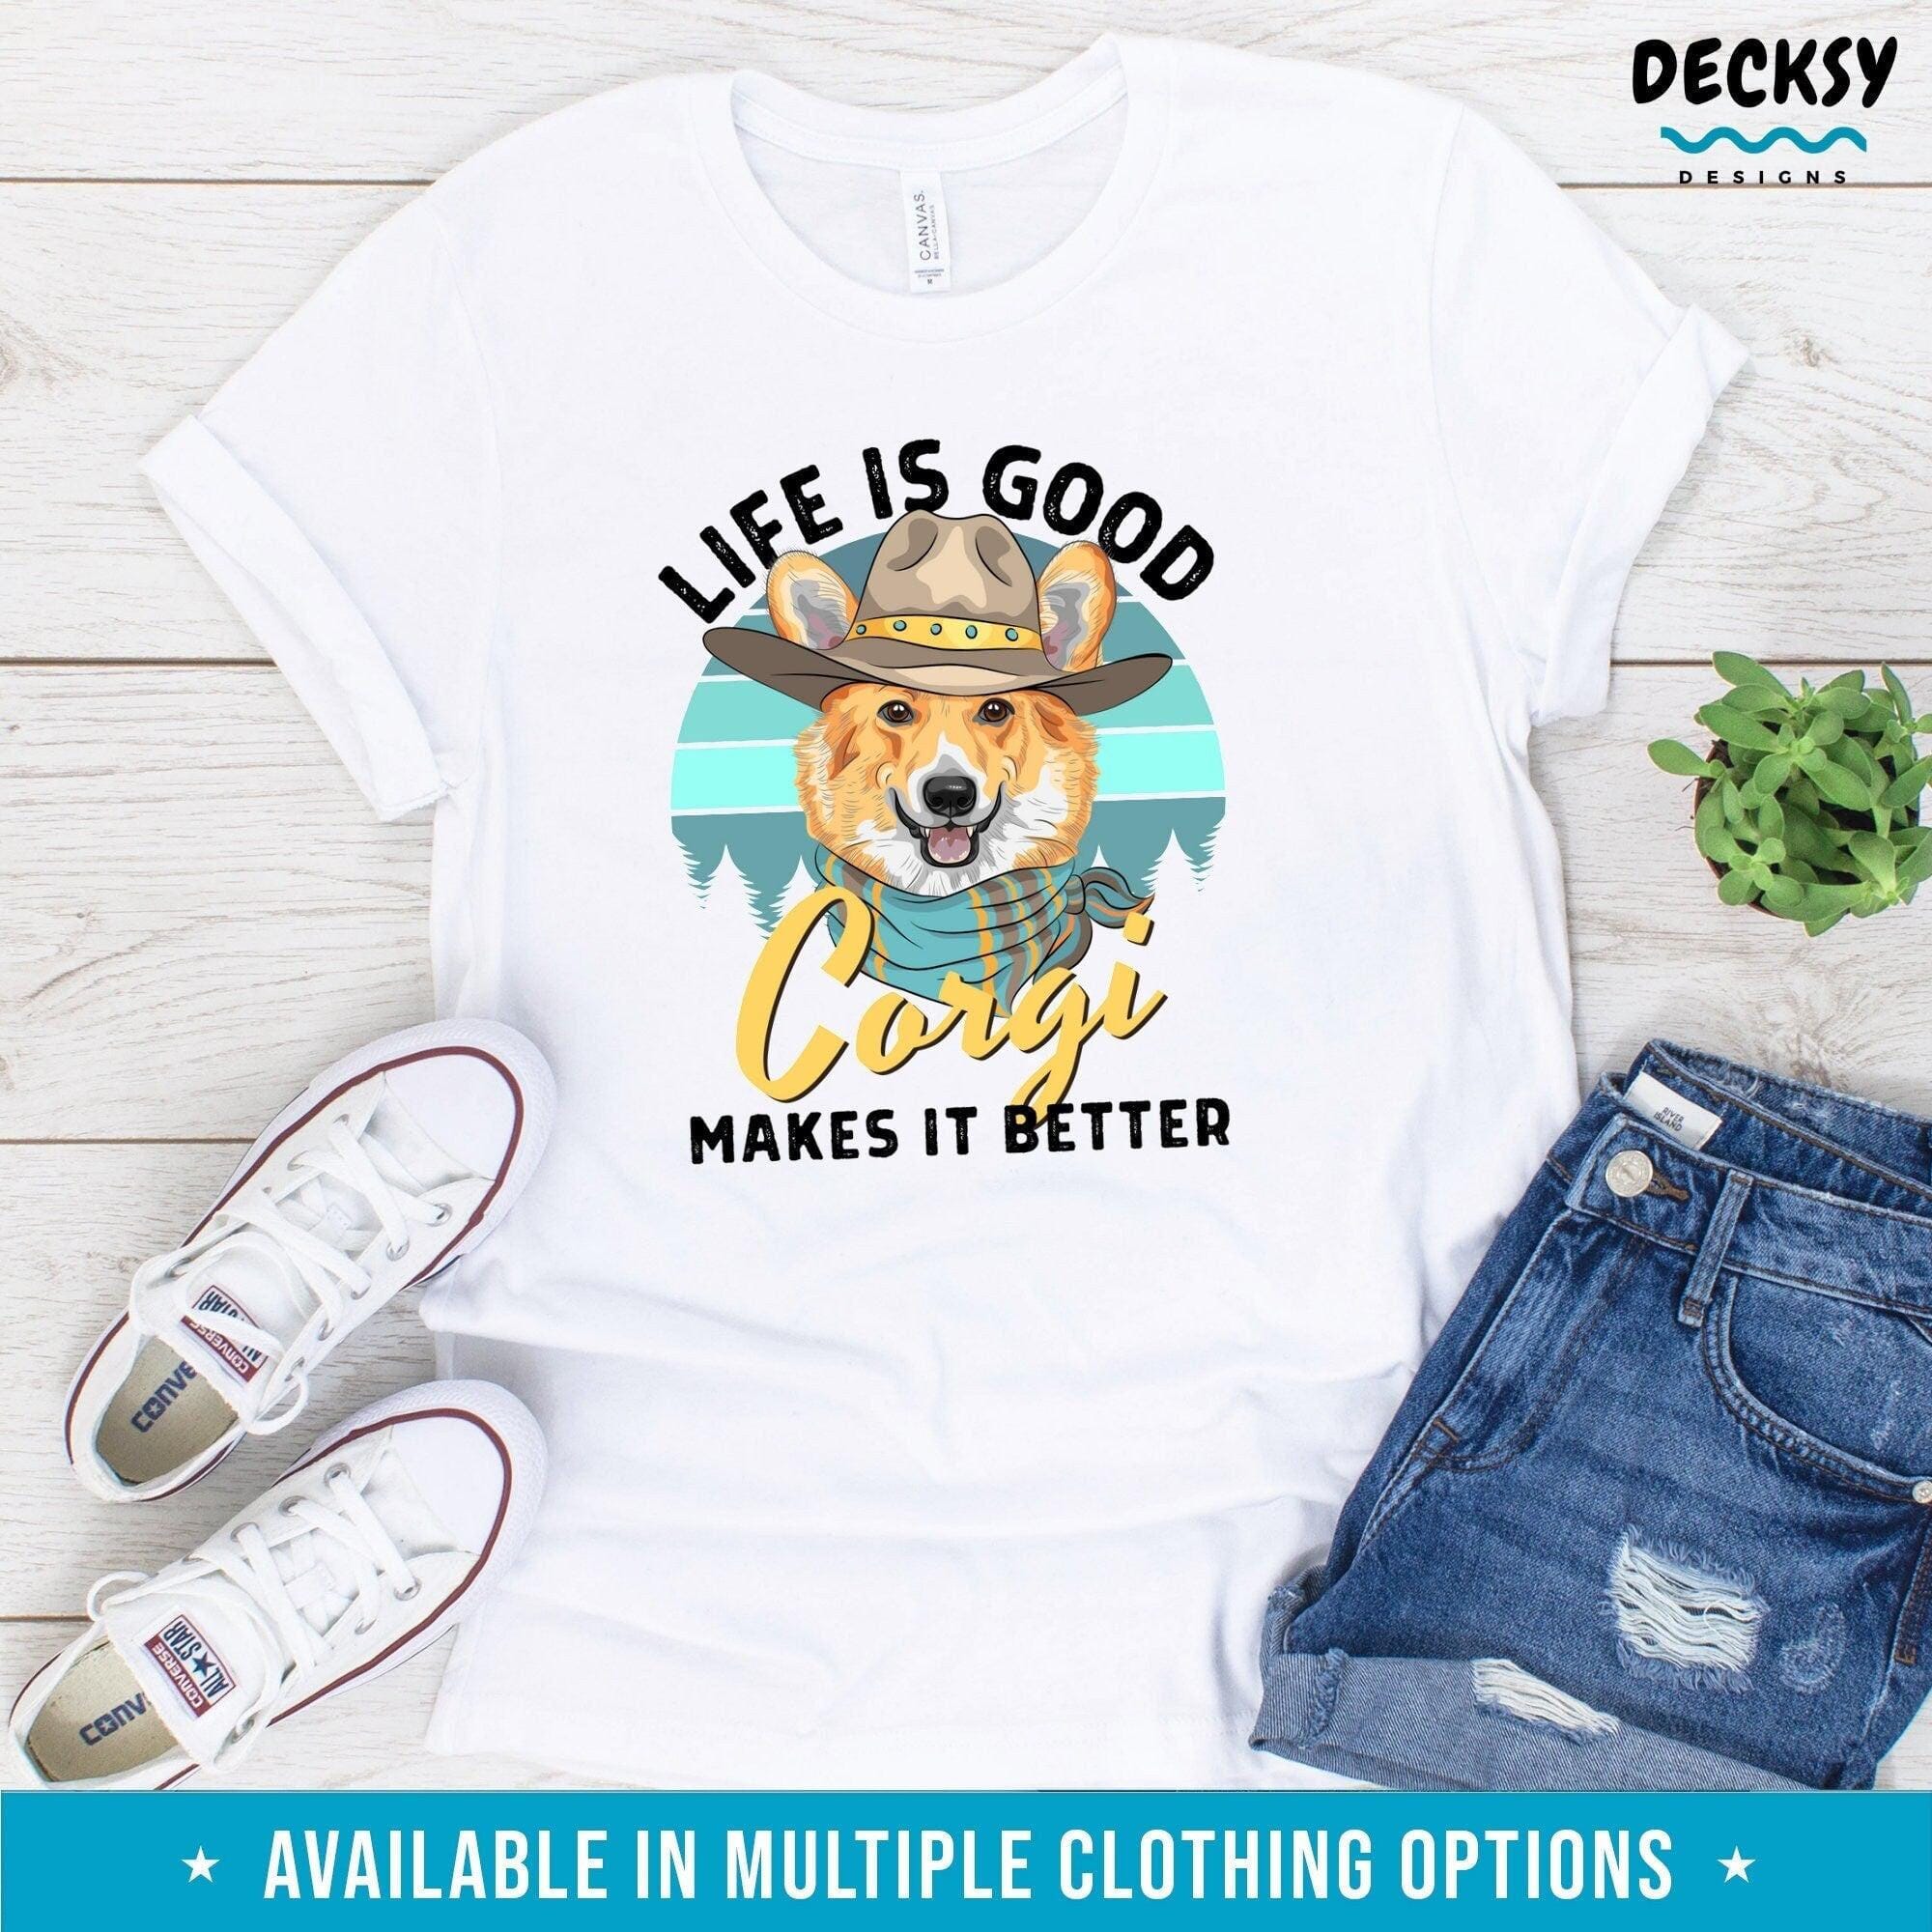 Corgi Lover Shirt, Corgi Owner Gift-Clothing:Gender-Neutral Adult Clothing:Tops & Tees:T-shirts:Graphic Tees-DecksyDesigns